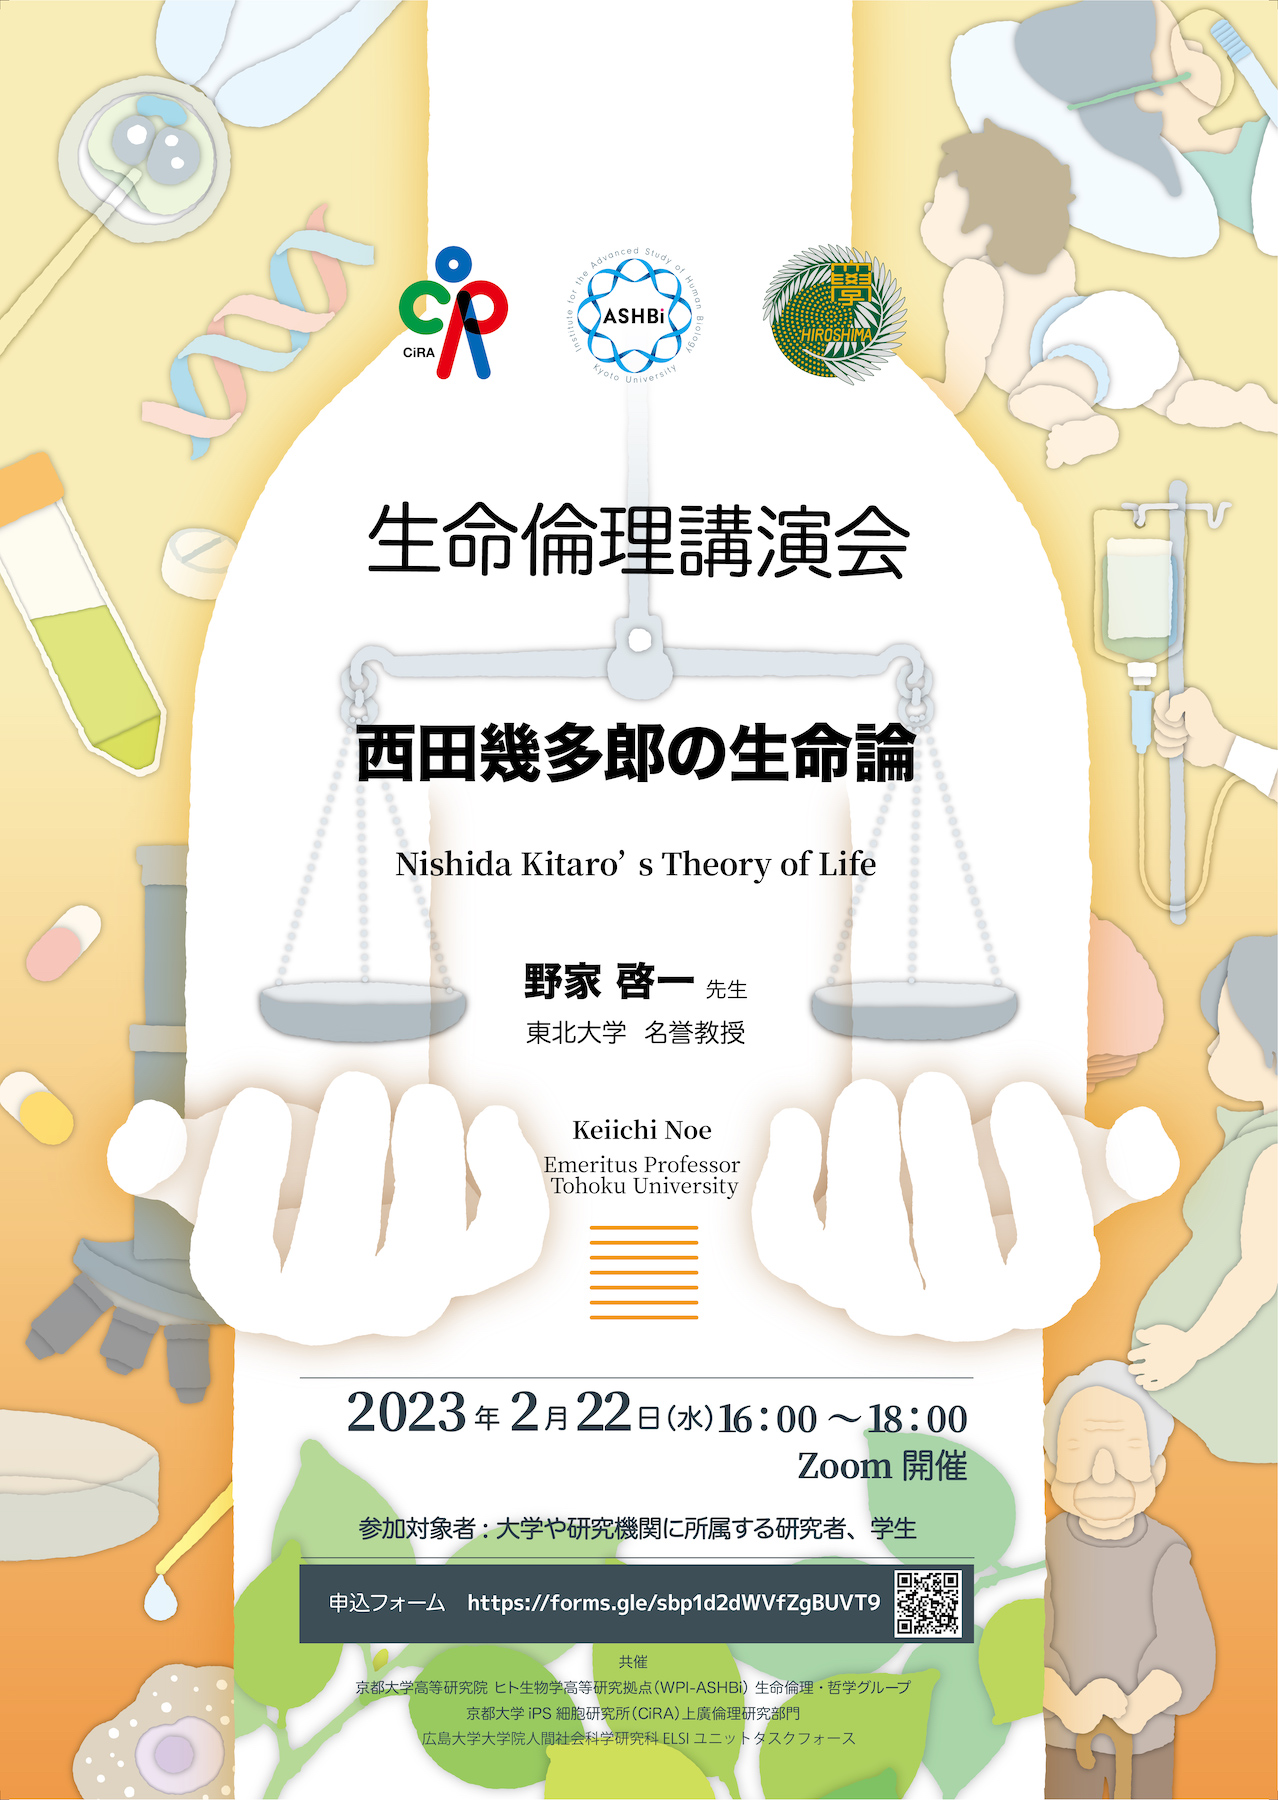 Bioethics Lecture: Nishida Kitaro’s Theory of Life